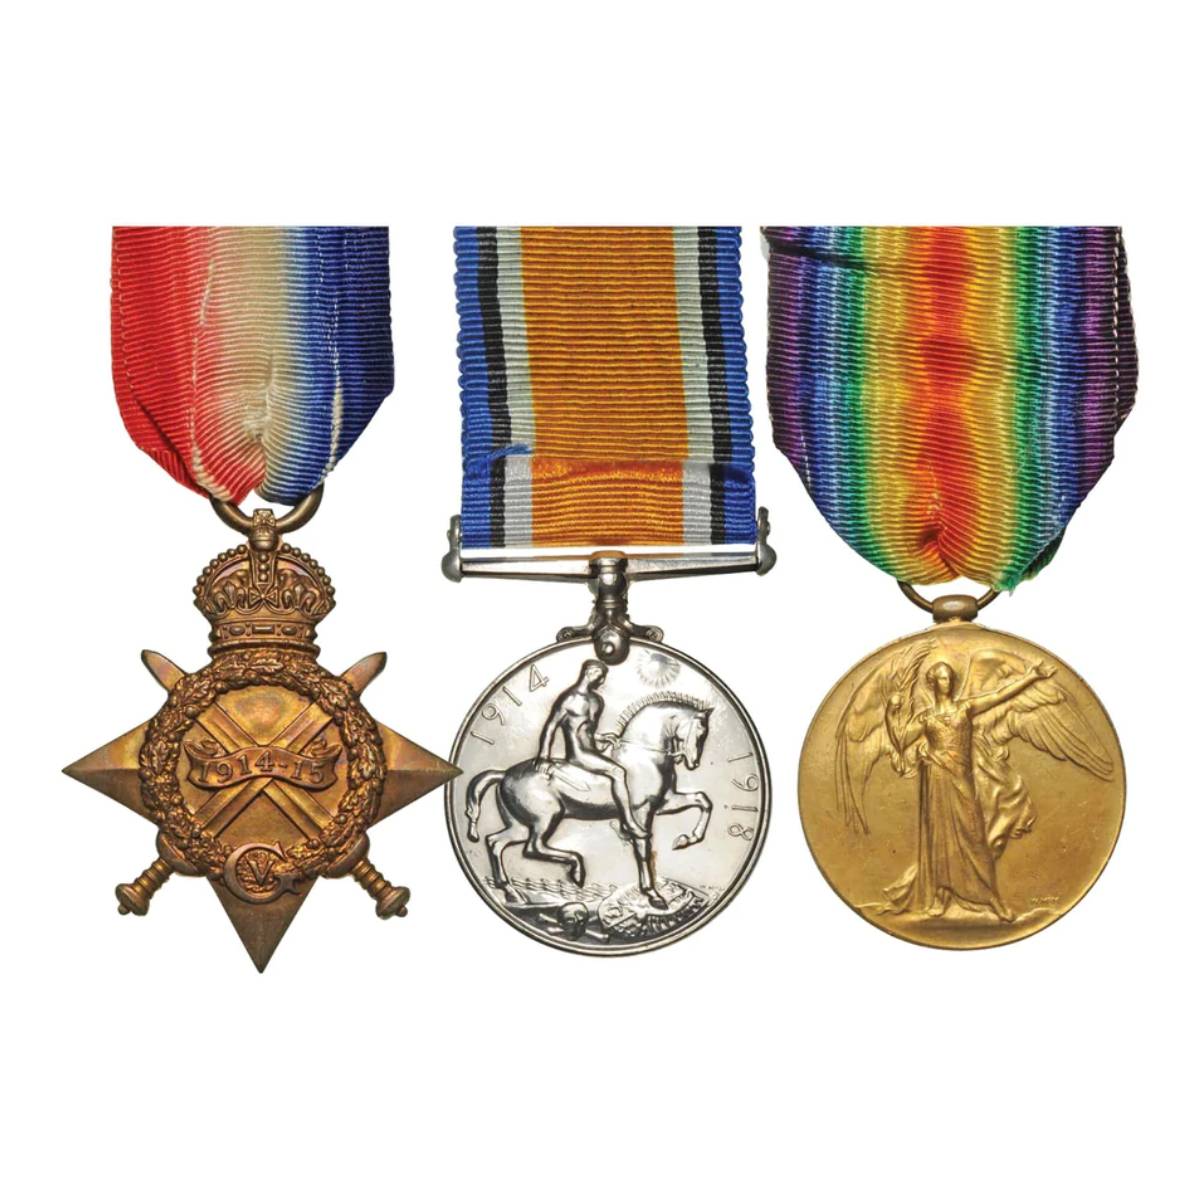 1914-1918 WWI Service Medal Trio